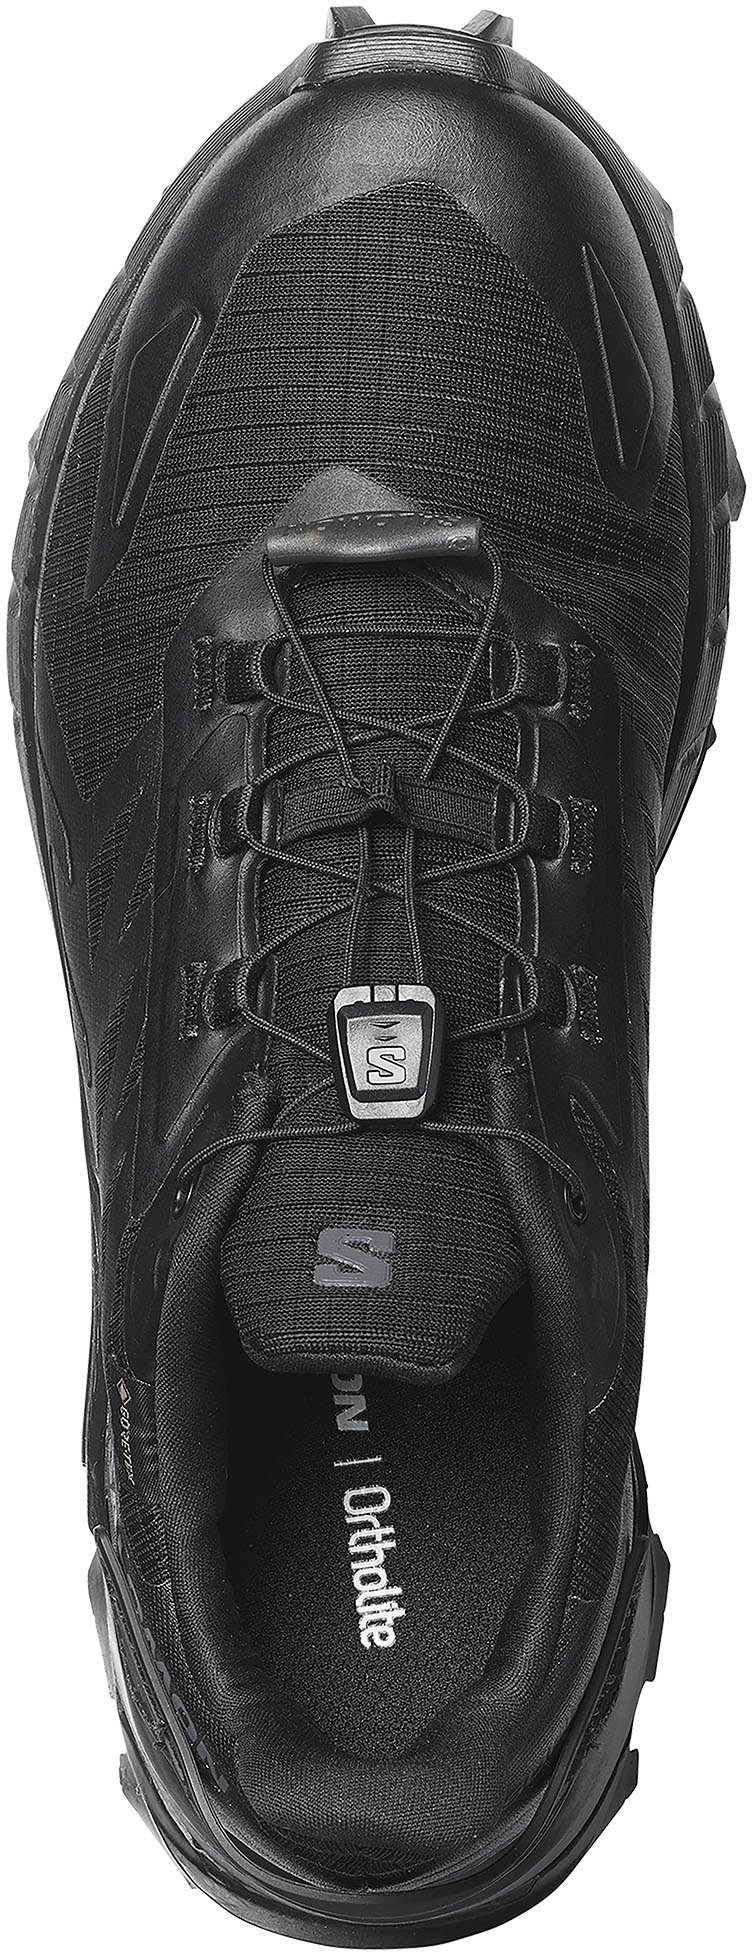 Salomon SUPERCROSS 4 schwarz wasserdicht, Trailrunningschuhe W GORE-TEX® Trailrunningschuh